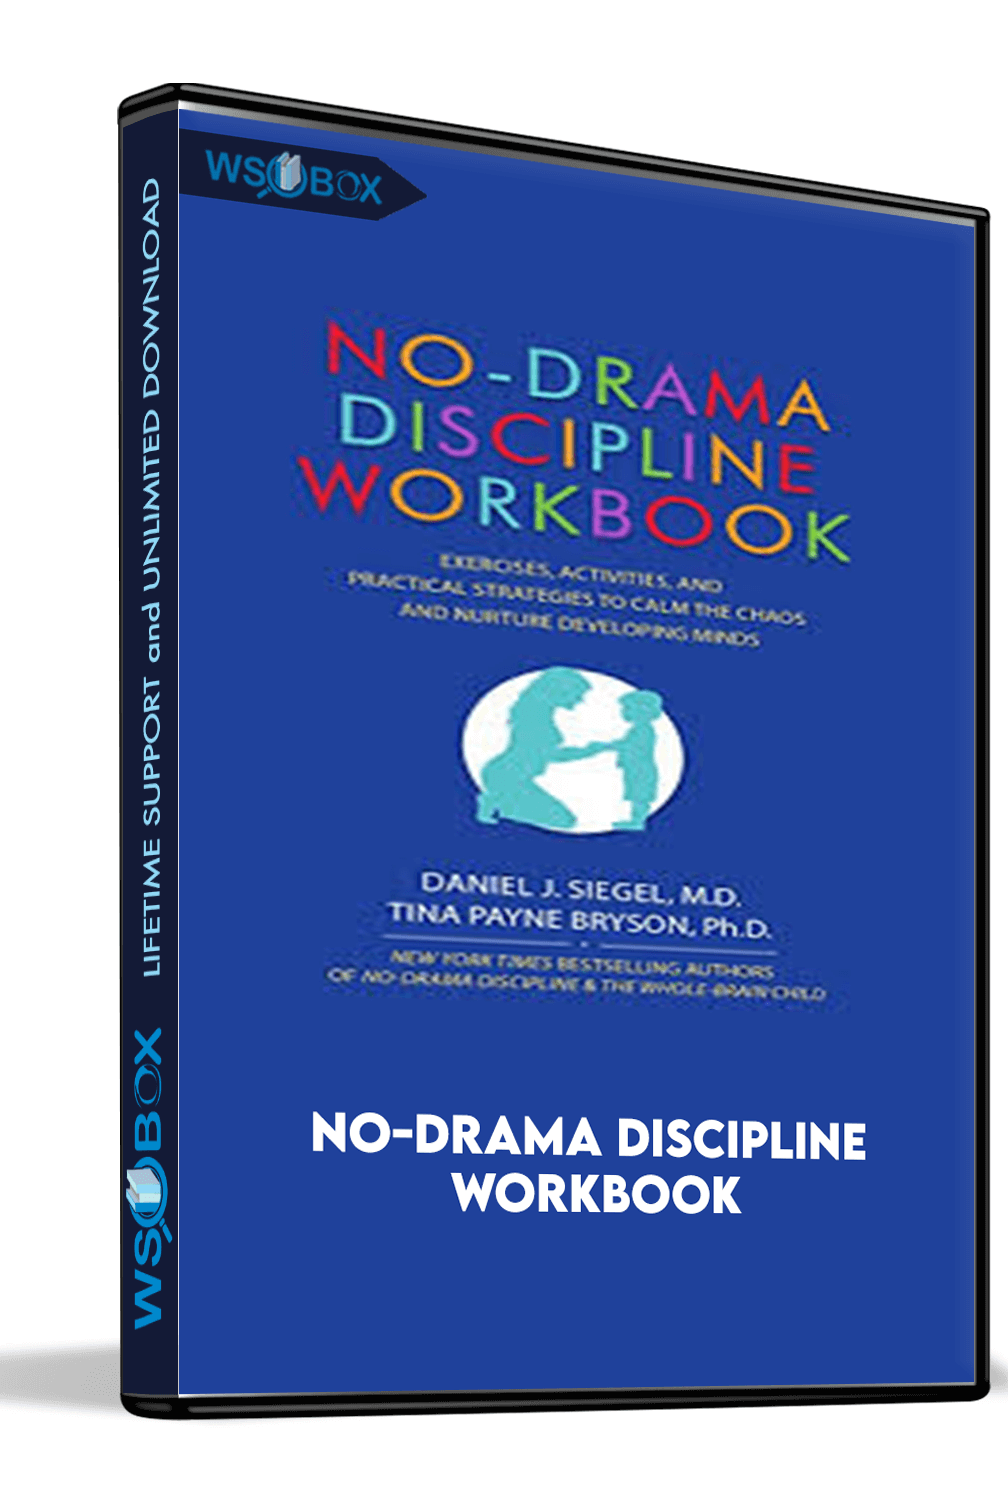 no-drama-discipline-workbook